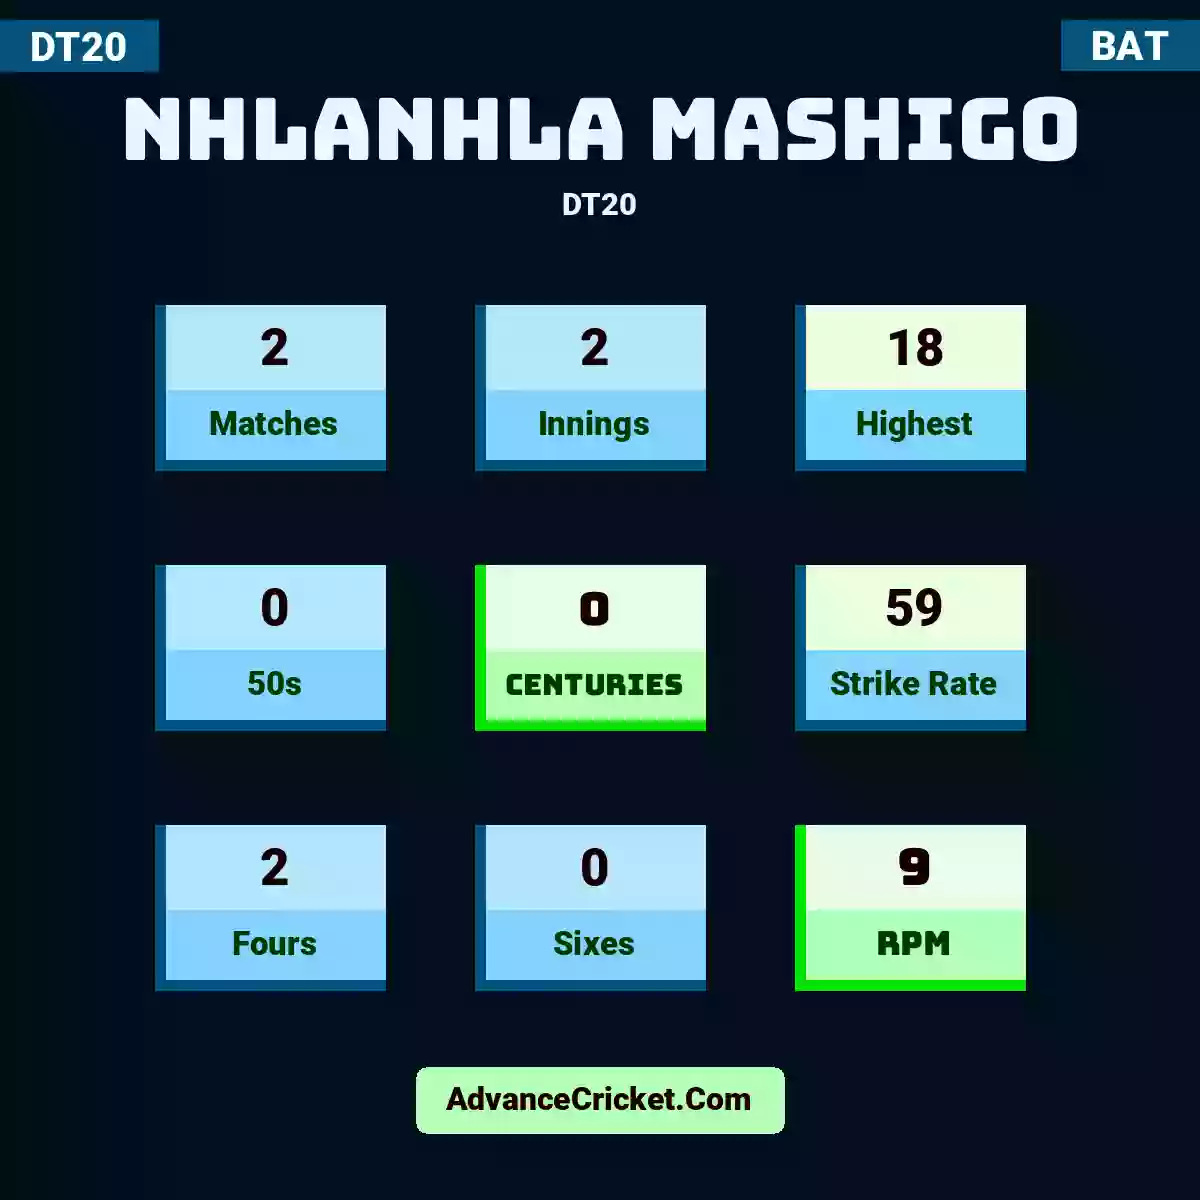 Nhlanhla Mashigo DT20 , Nhlanhla Mashigo played 2 matches, scored 18 runs as highest, 0 half-centuries, and 0 centuries, with a strike rate of 59. N.Mashigo hit 2 fours and 0 sixes, with an RPM of 9.